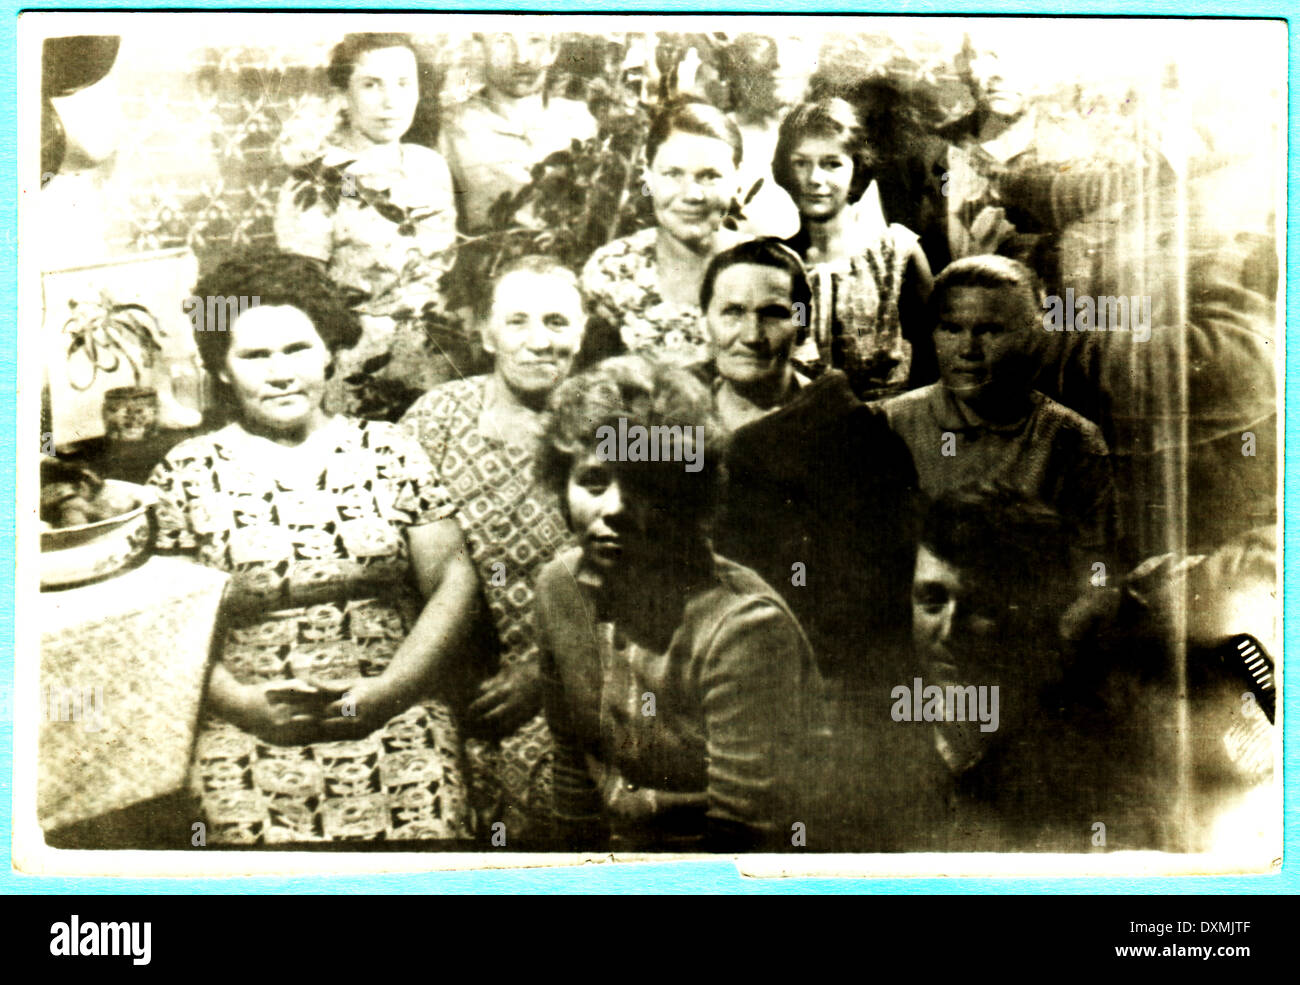 USSR - CIRCA 1950s: An antique photo shows Group portrait Stock Photo